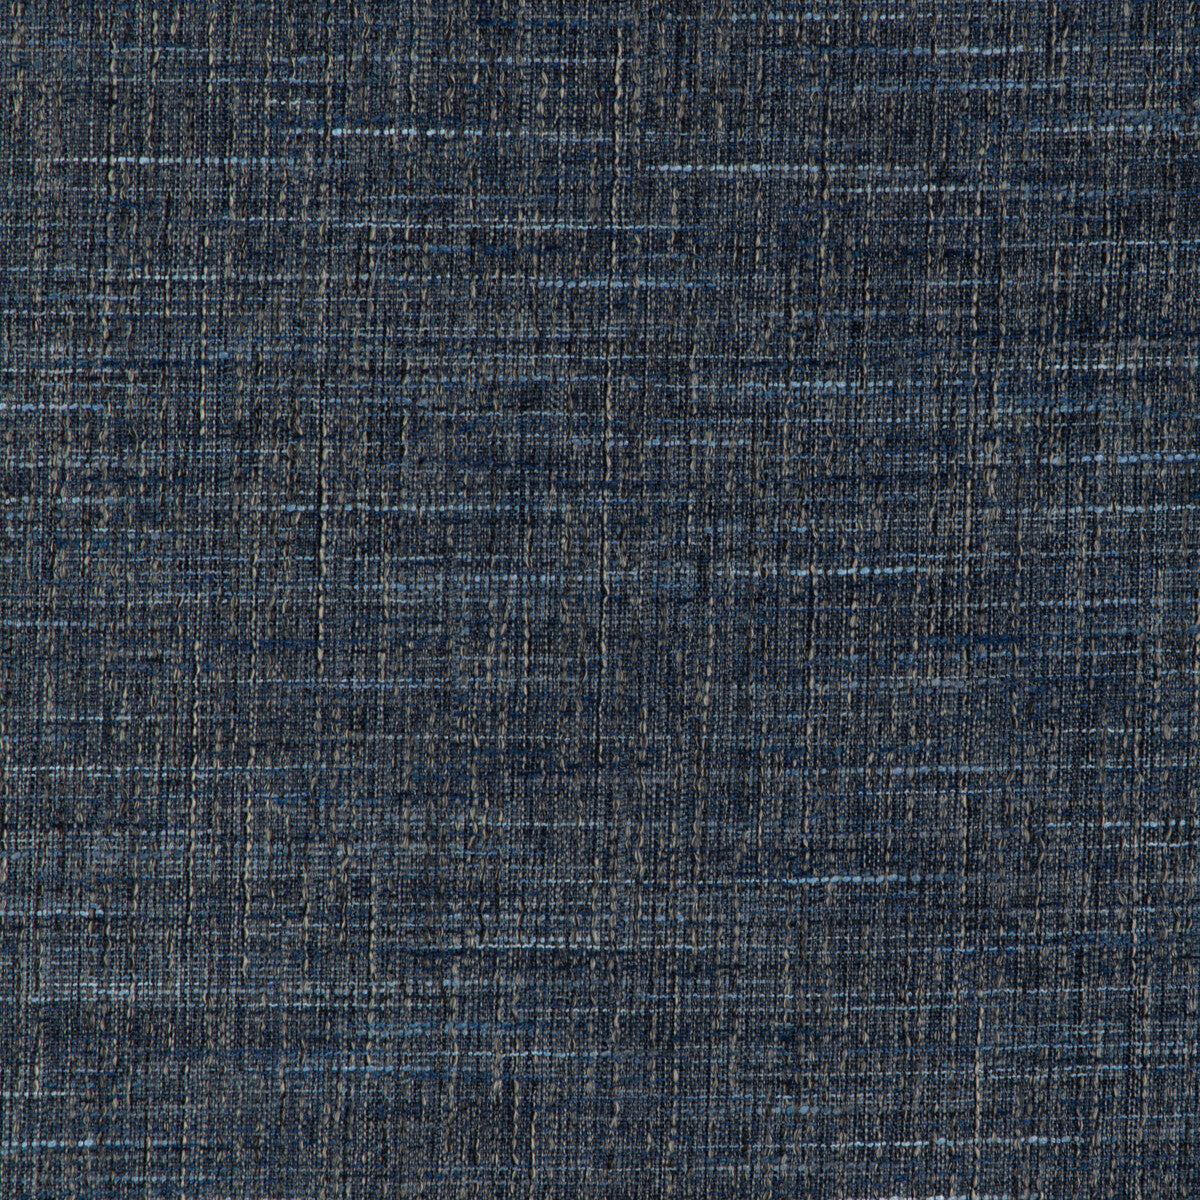 Kravet Smart fabric in 36661-516 color - pattern 36661.516.0 - by Kravet Smart in the Performance Kravetarmor collection